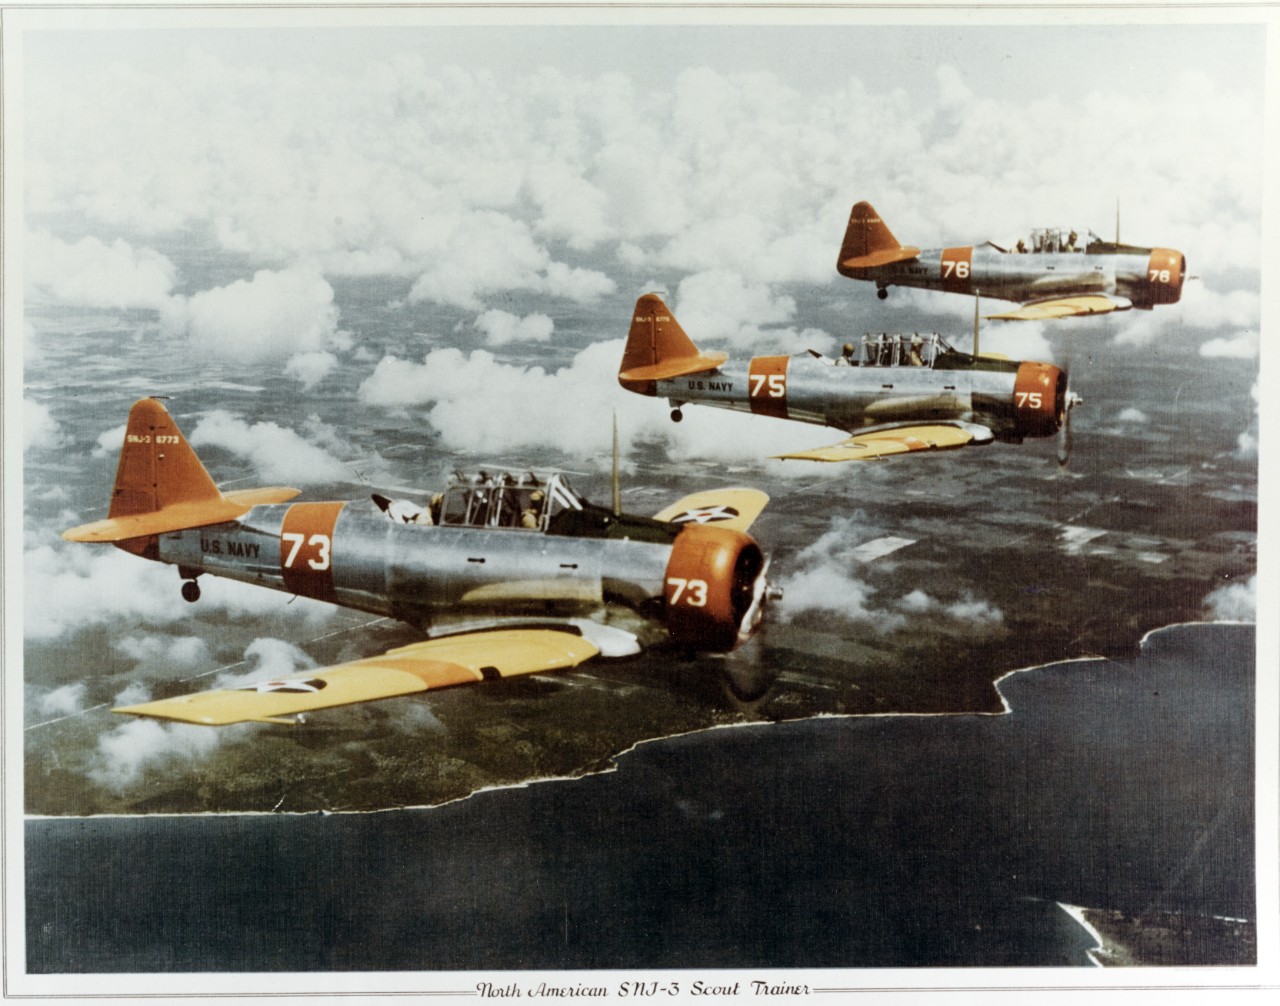 North American SNJ-3 Trainer Planes